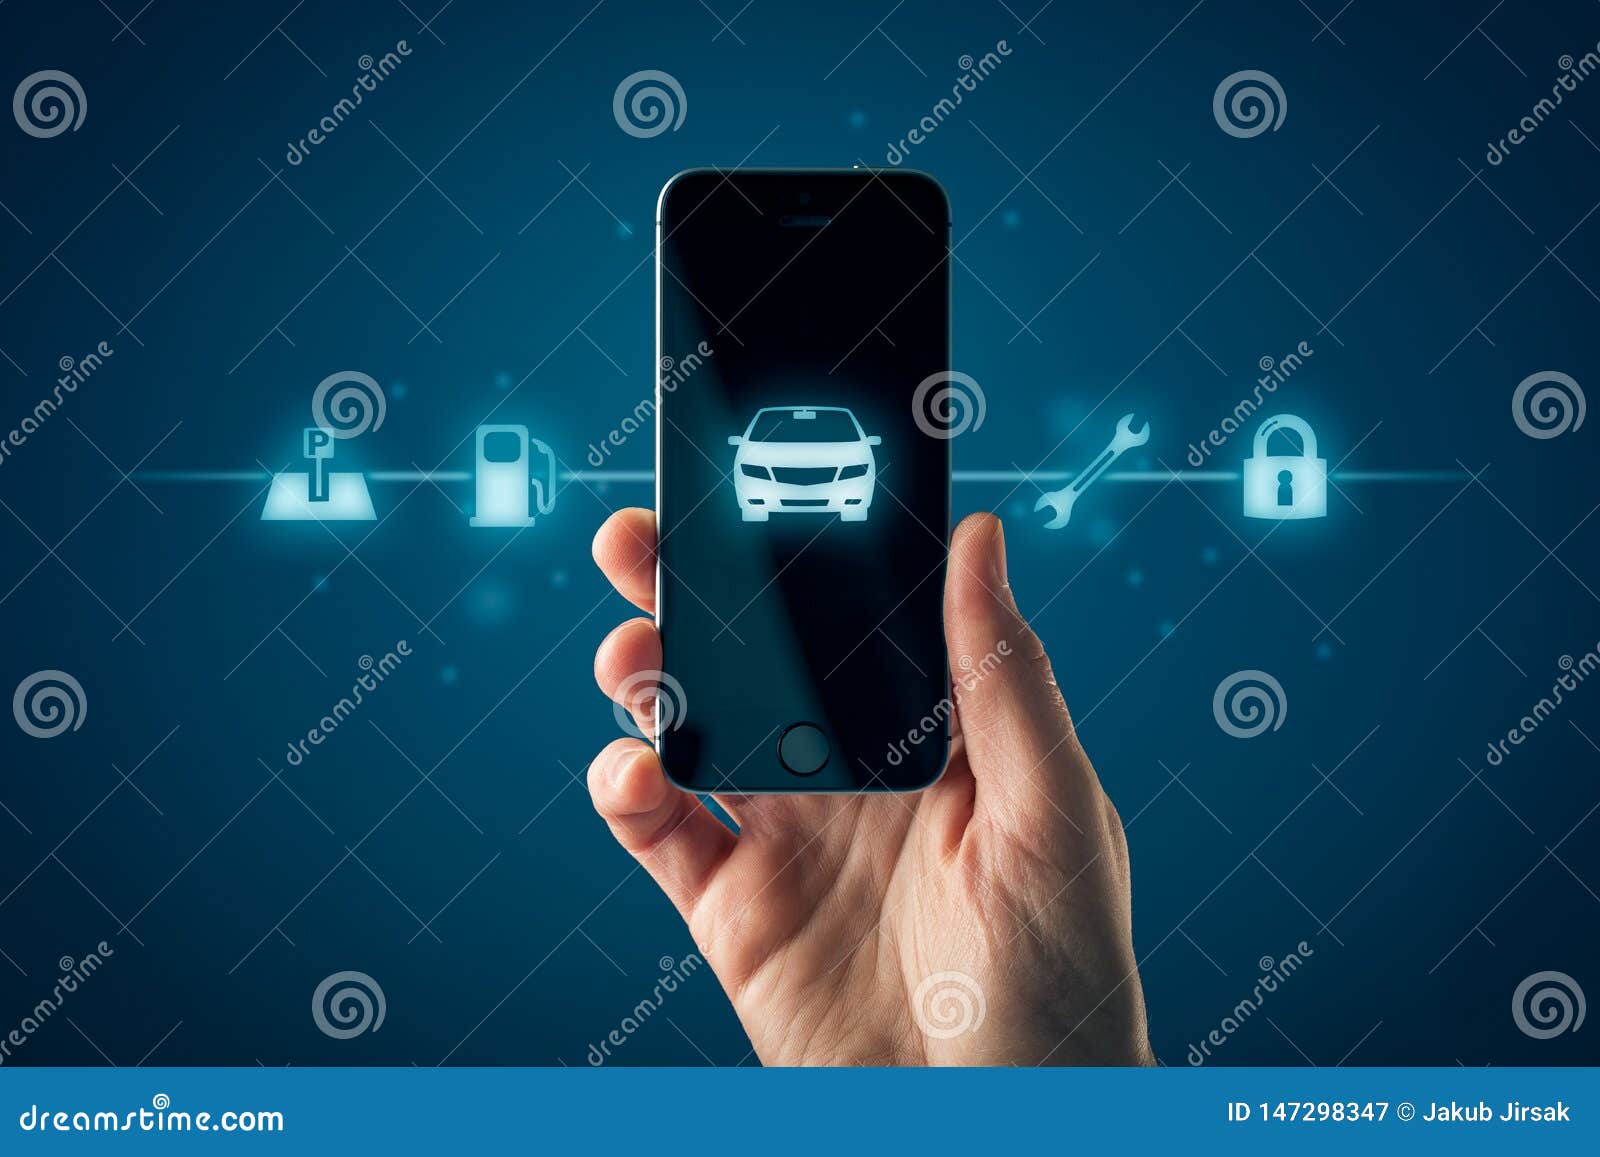 intelligent car smart phone app concept